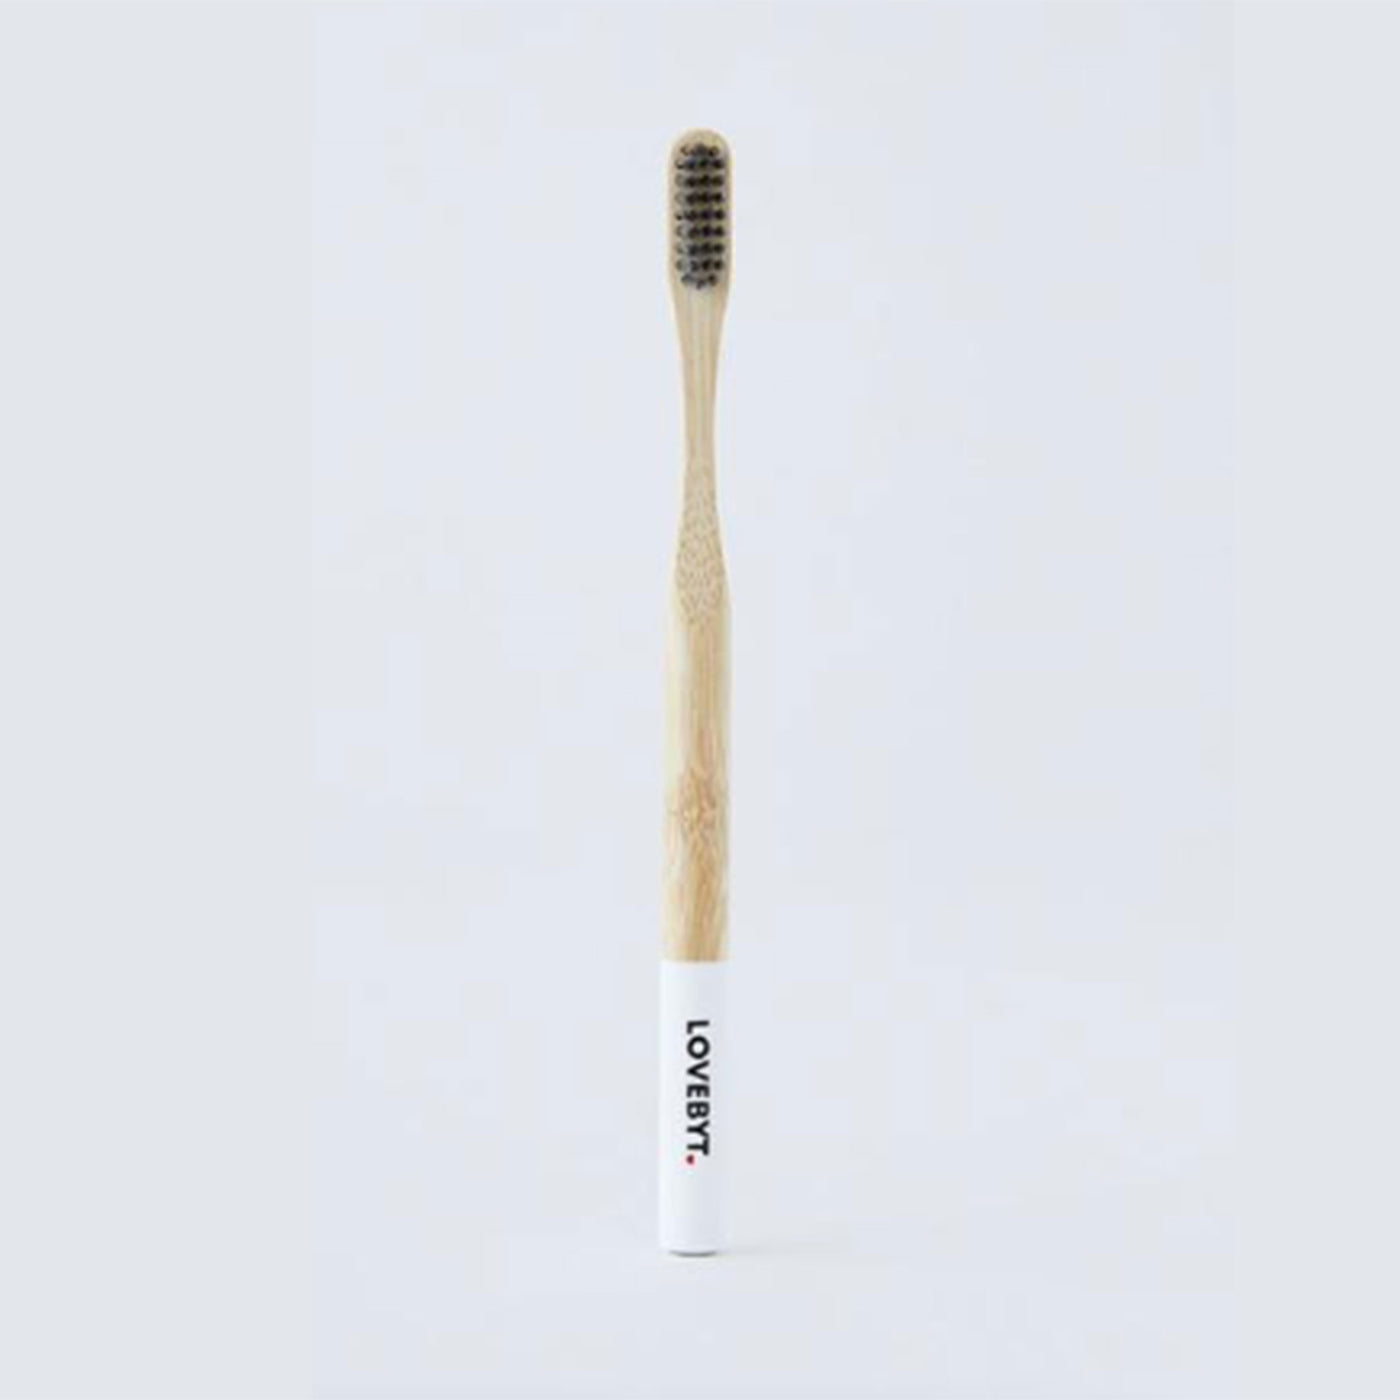 LOVEBYT Bamboo Toothbrush 2 pack